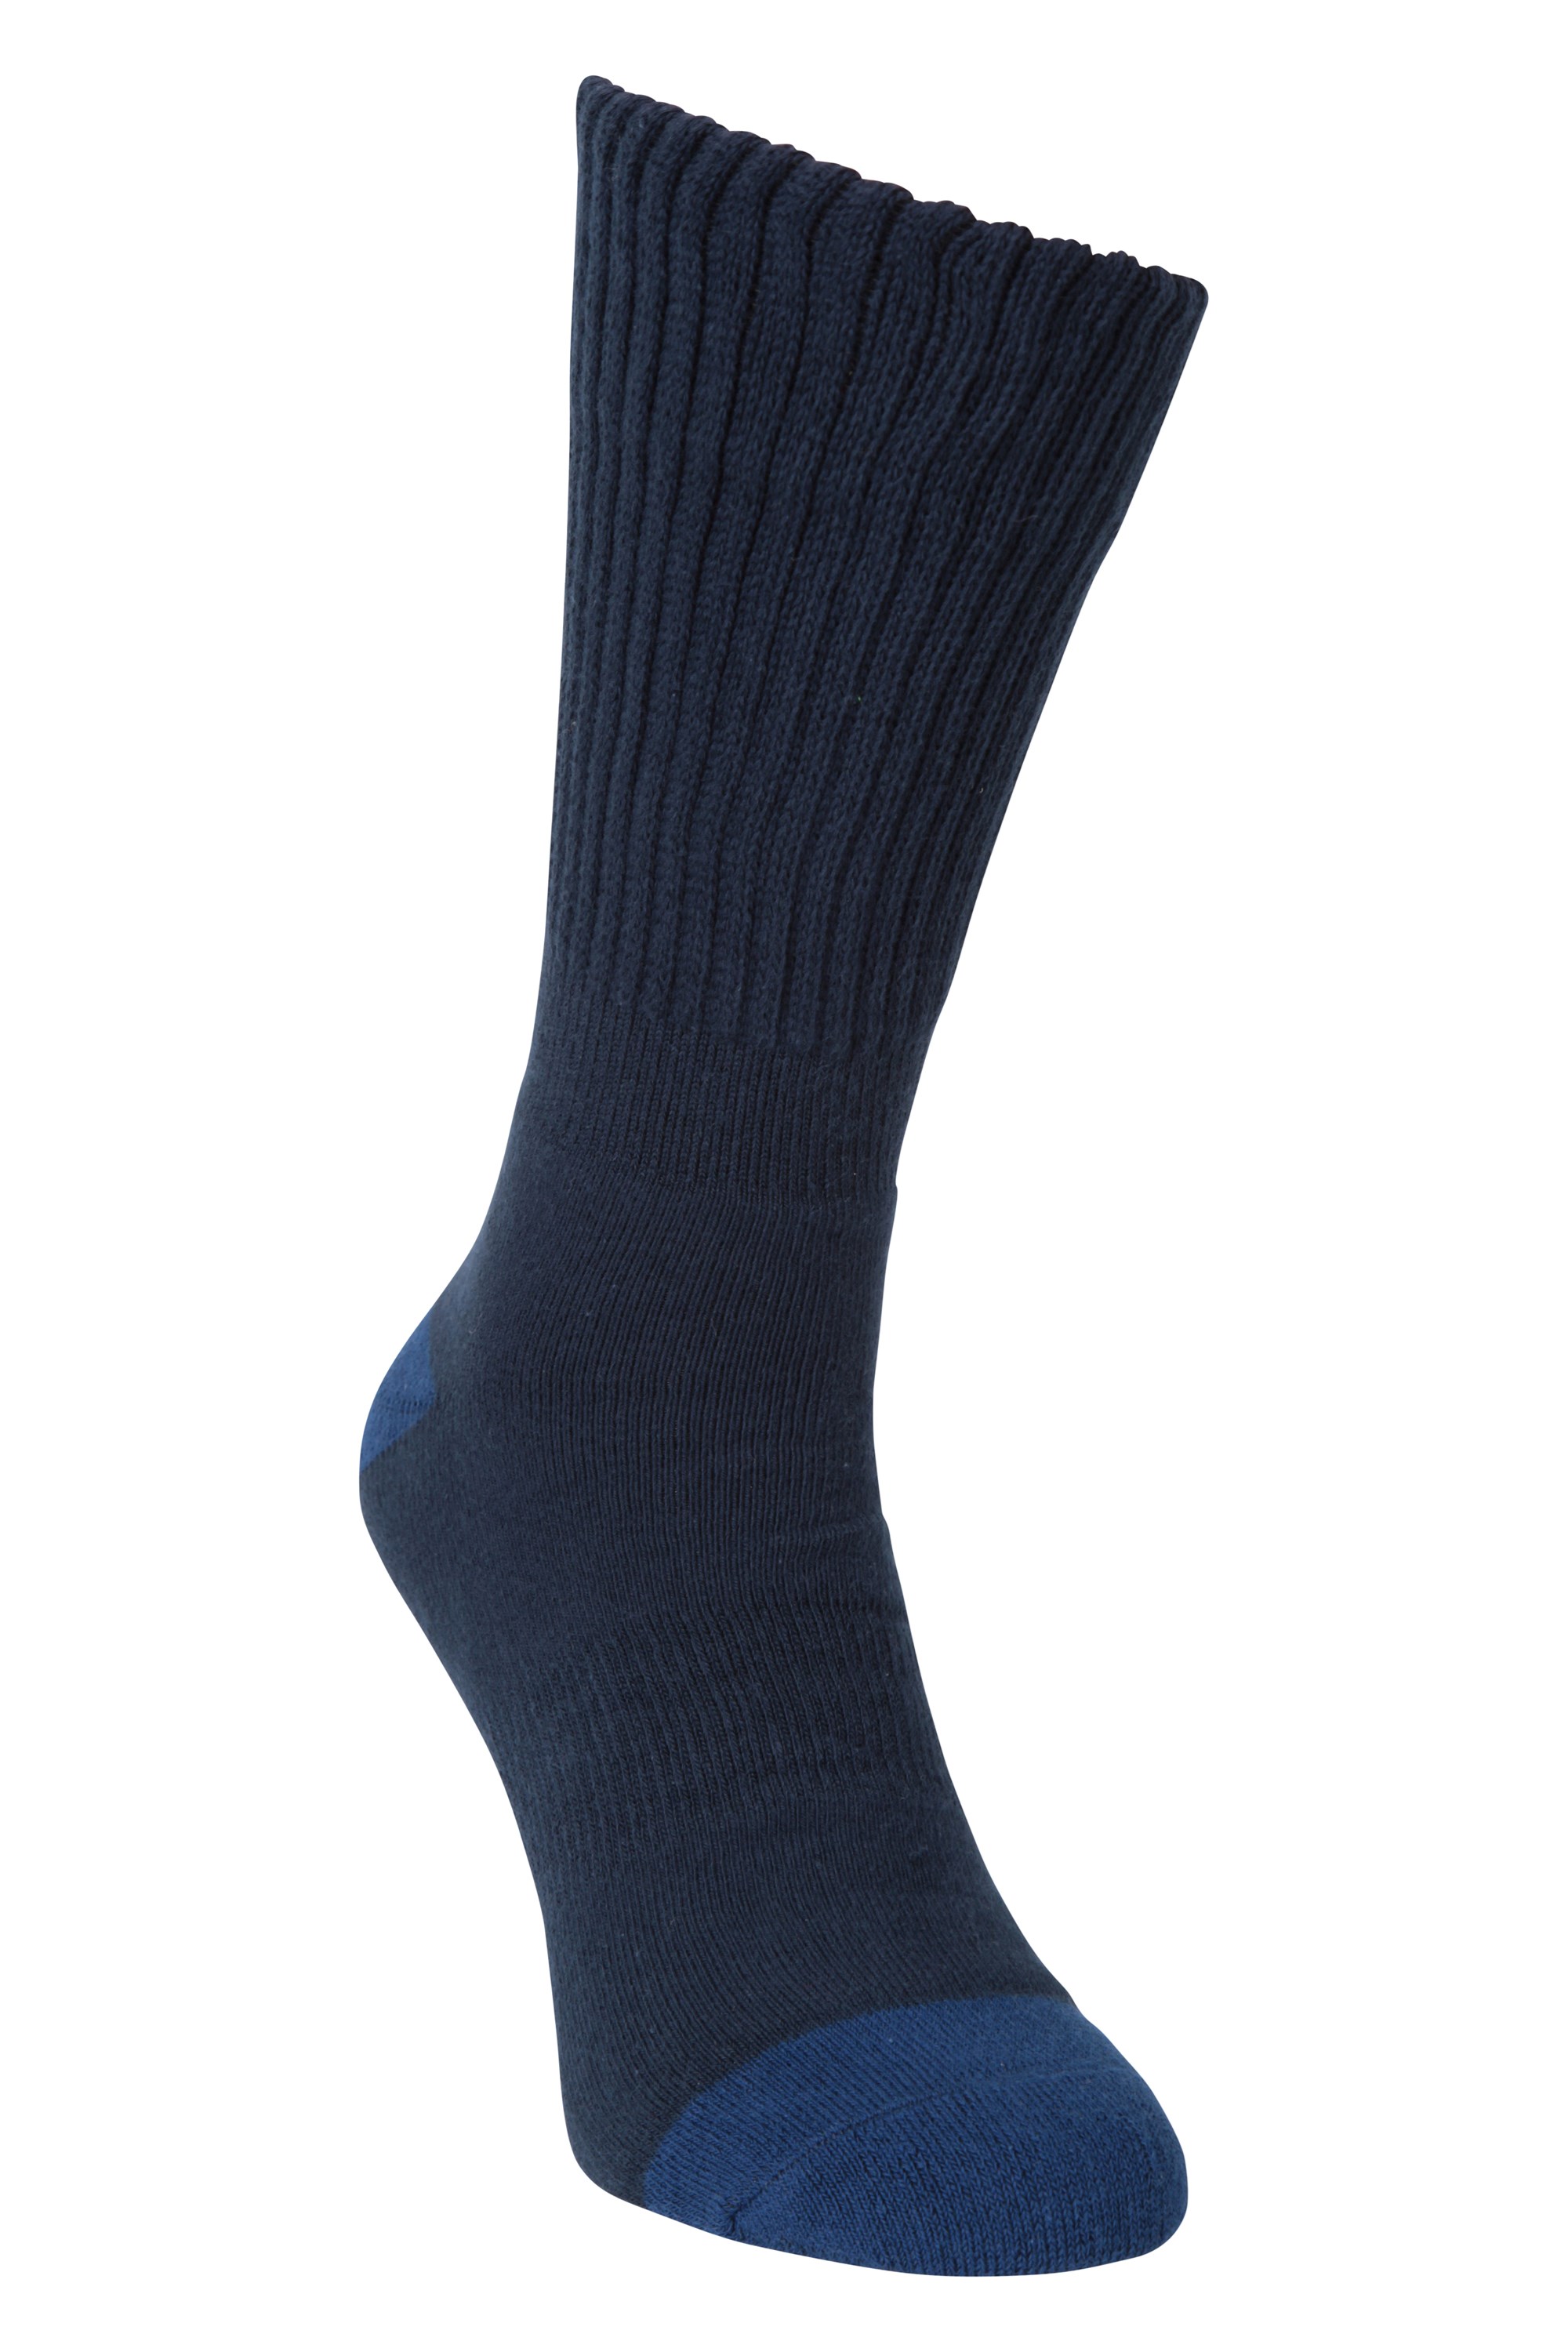 Double Layer Anti-chafe Walking Socks - Navy